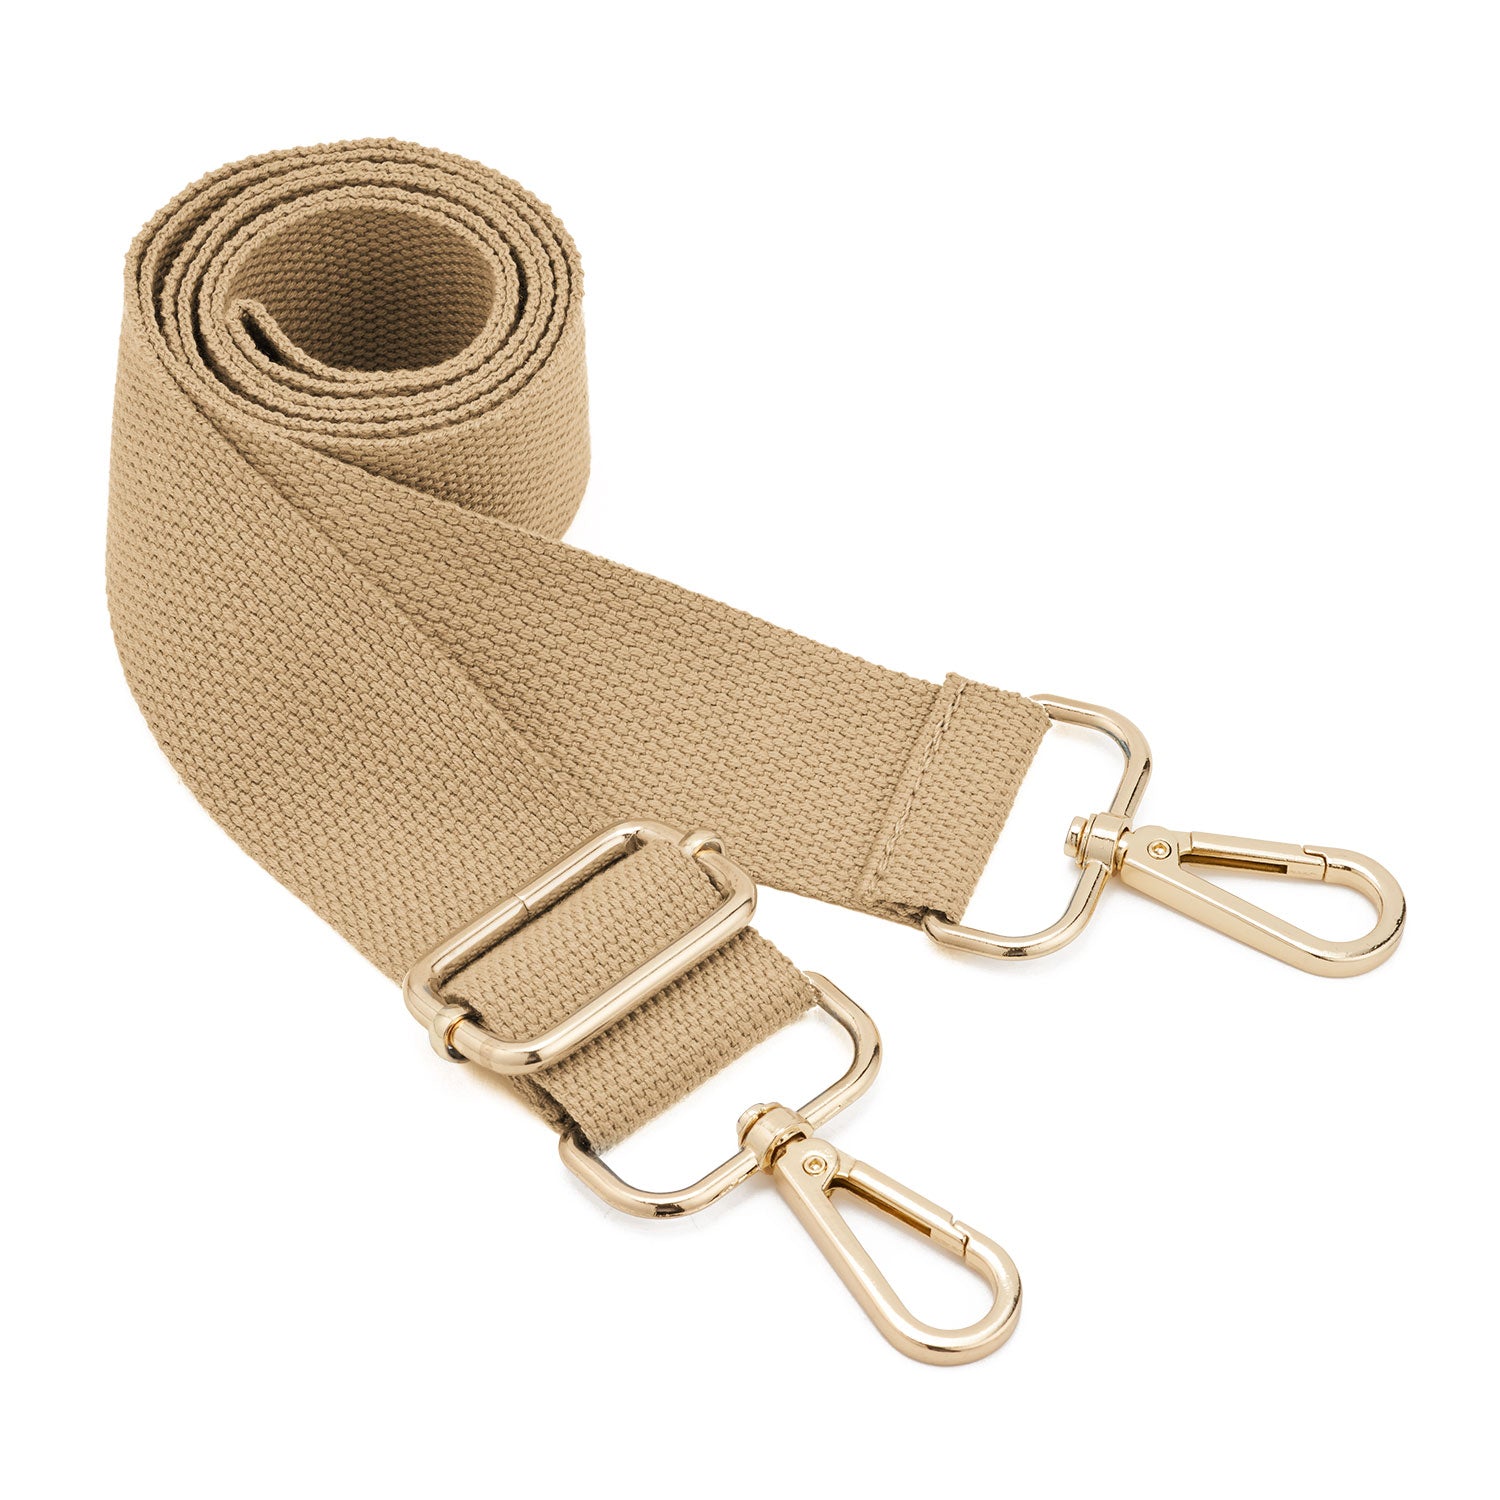 Total 42 Inches Shoulder Strap Adjustable Replacement for Crossbody Shoulder Bags Wide Canvas Purse Strap with Metal Hooks (Pink), (FBKJD)